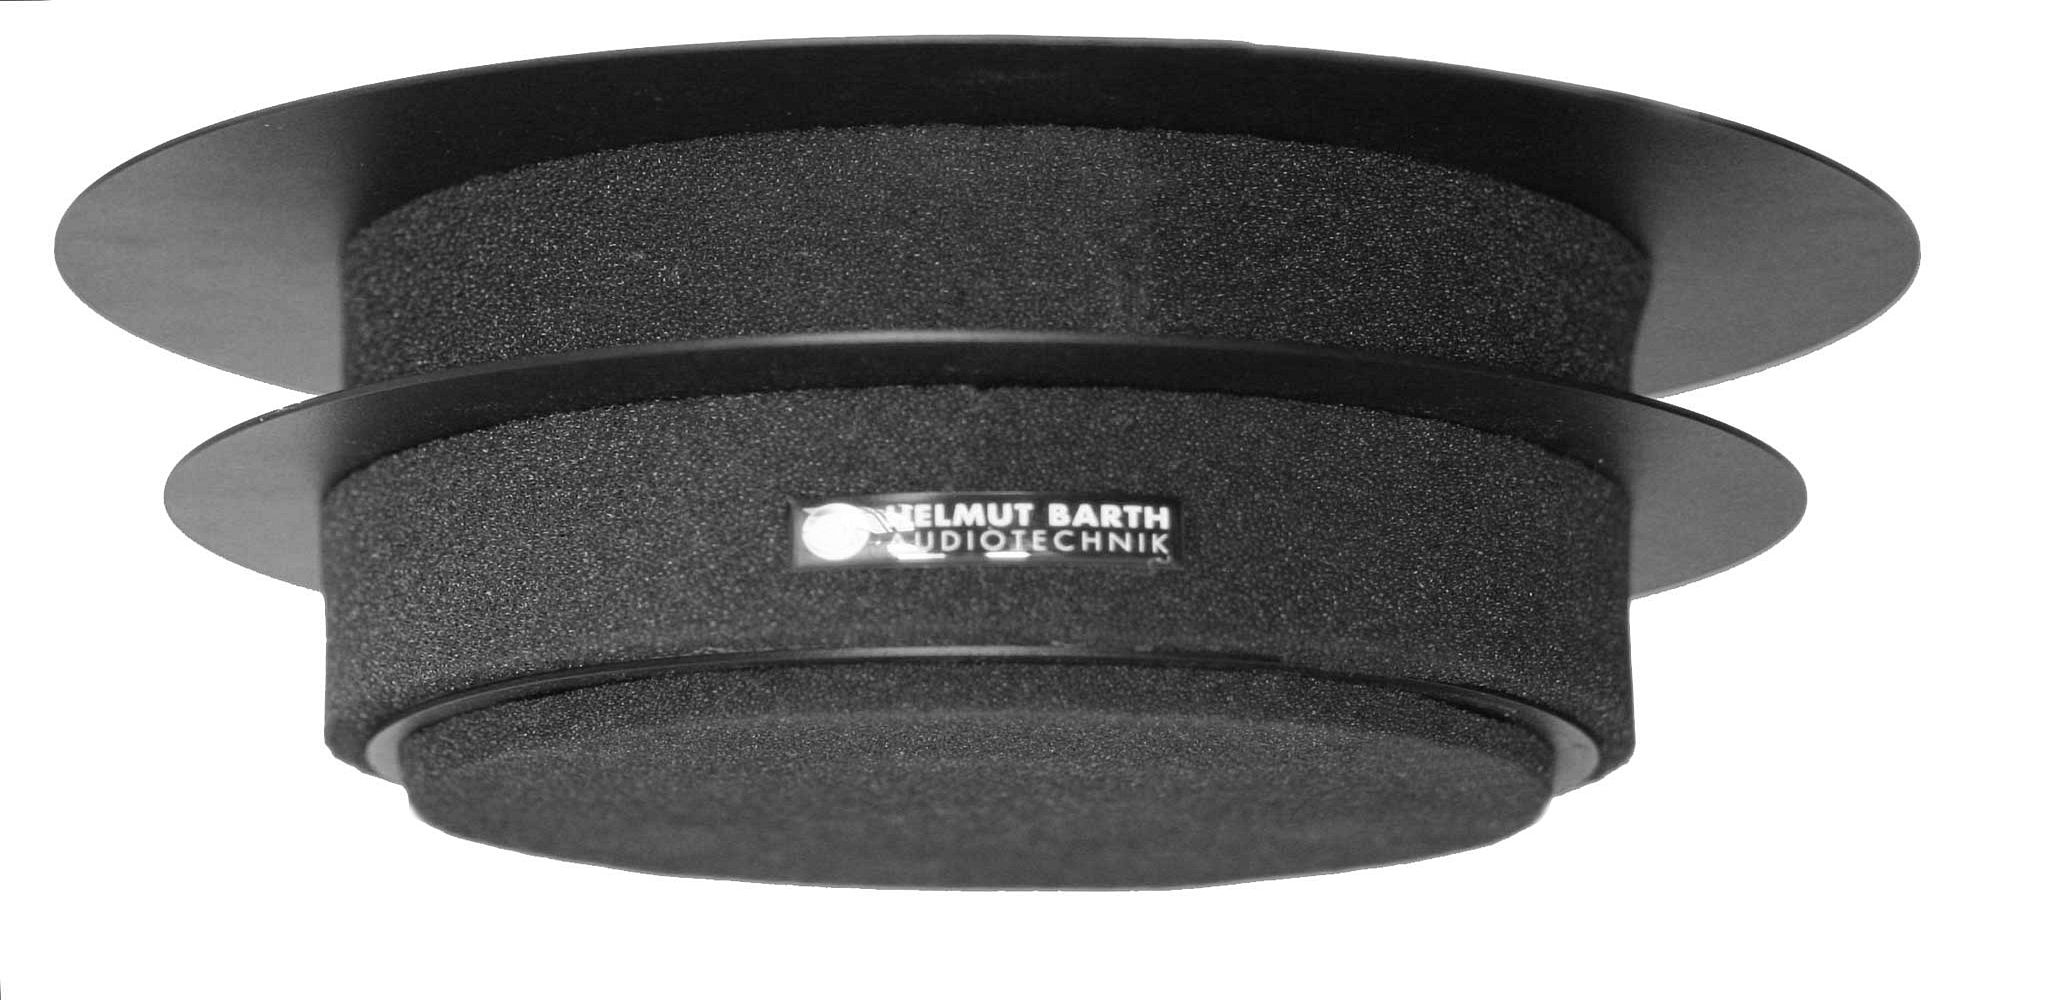 Acoustic Spot - Sound Dusche - Ultradirectrional Speaker System